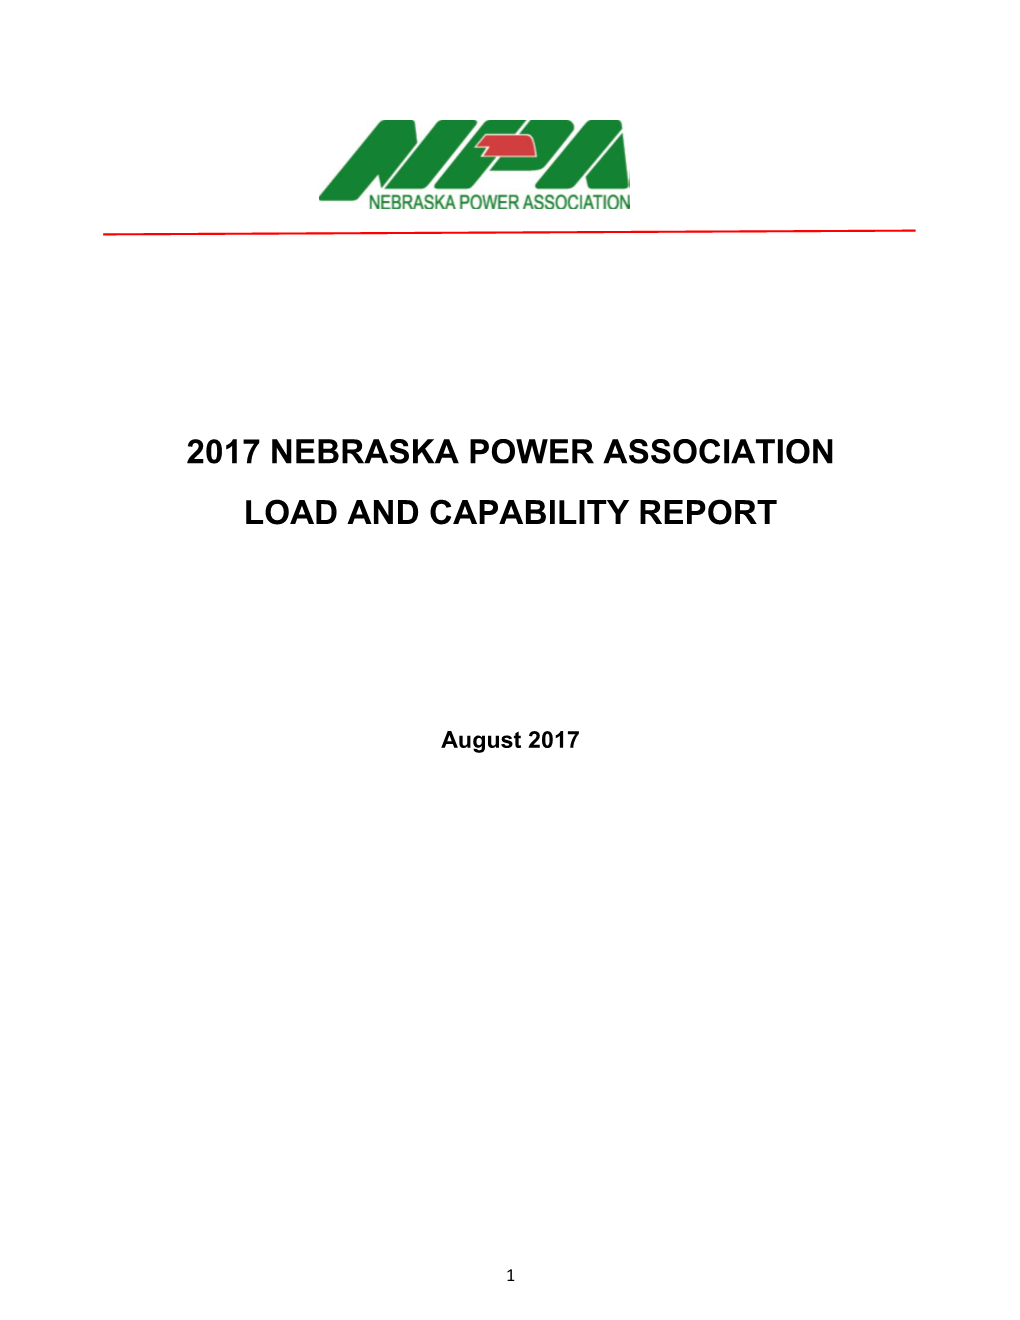 2017 Nebraska Power Association Load and Capability Report